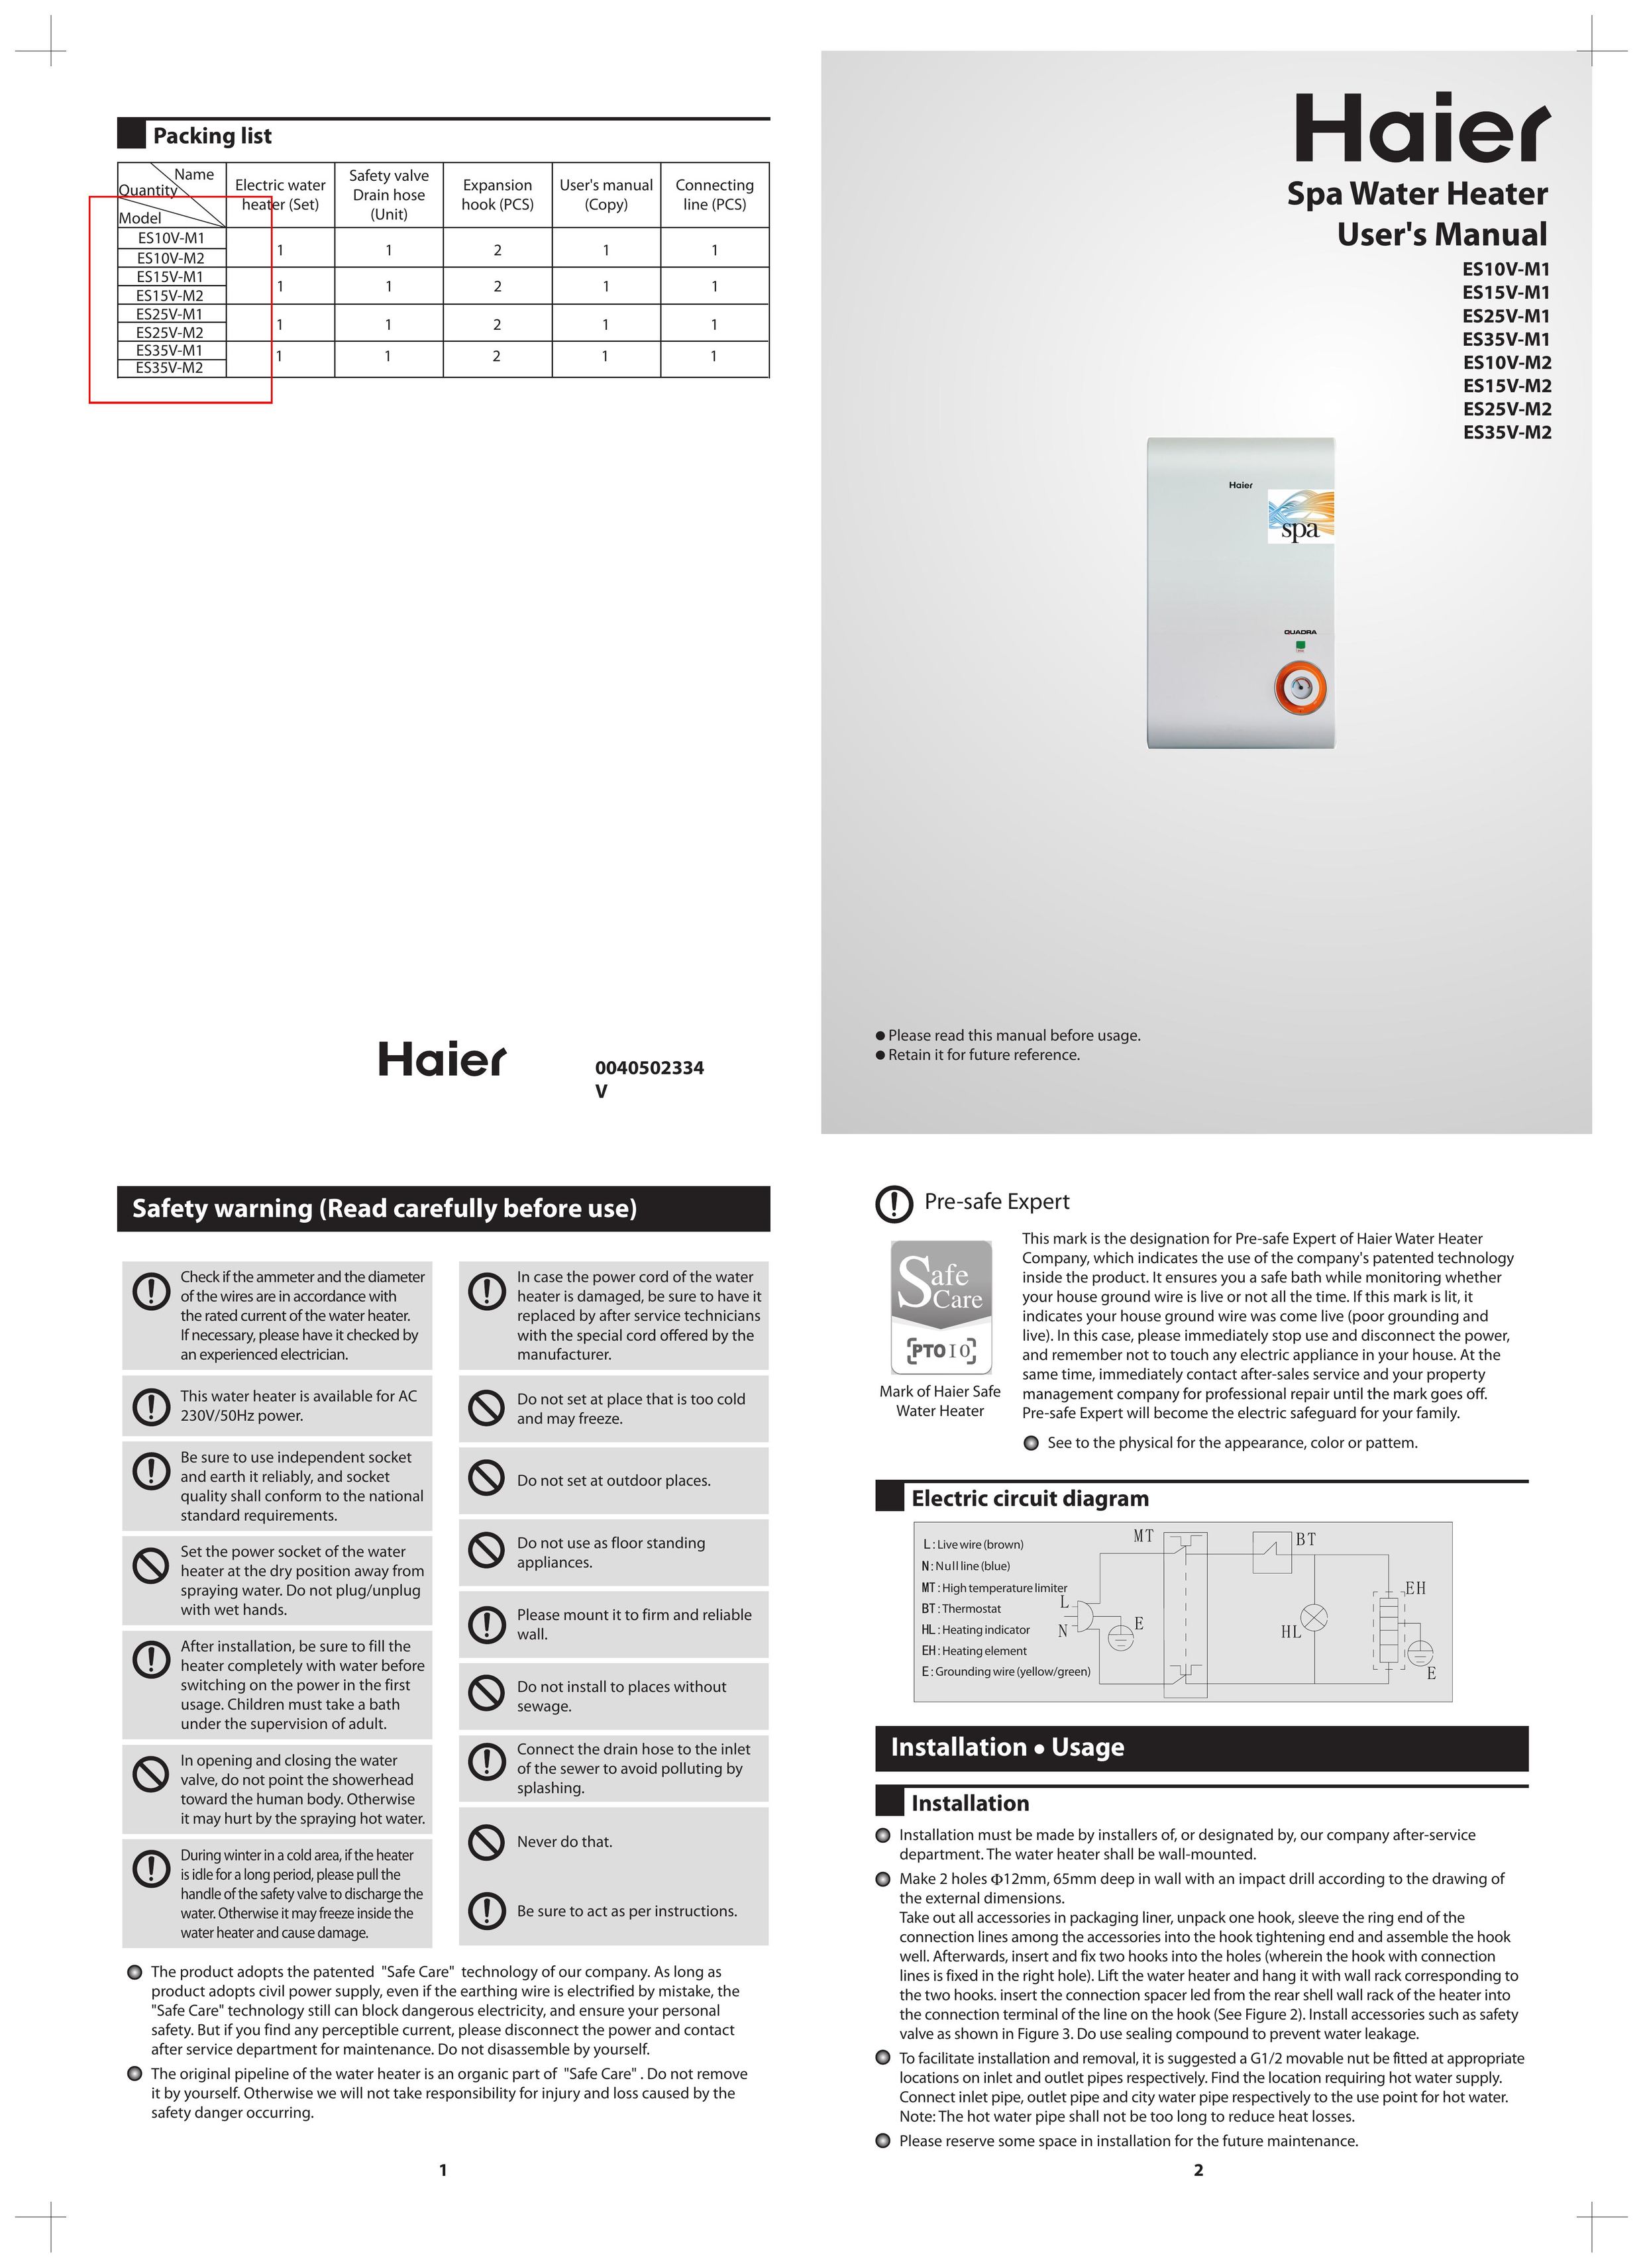 Haier ES35V-M1 Water Heater User Manual